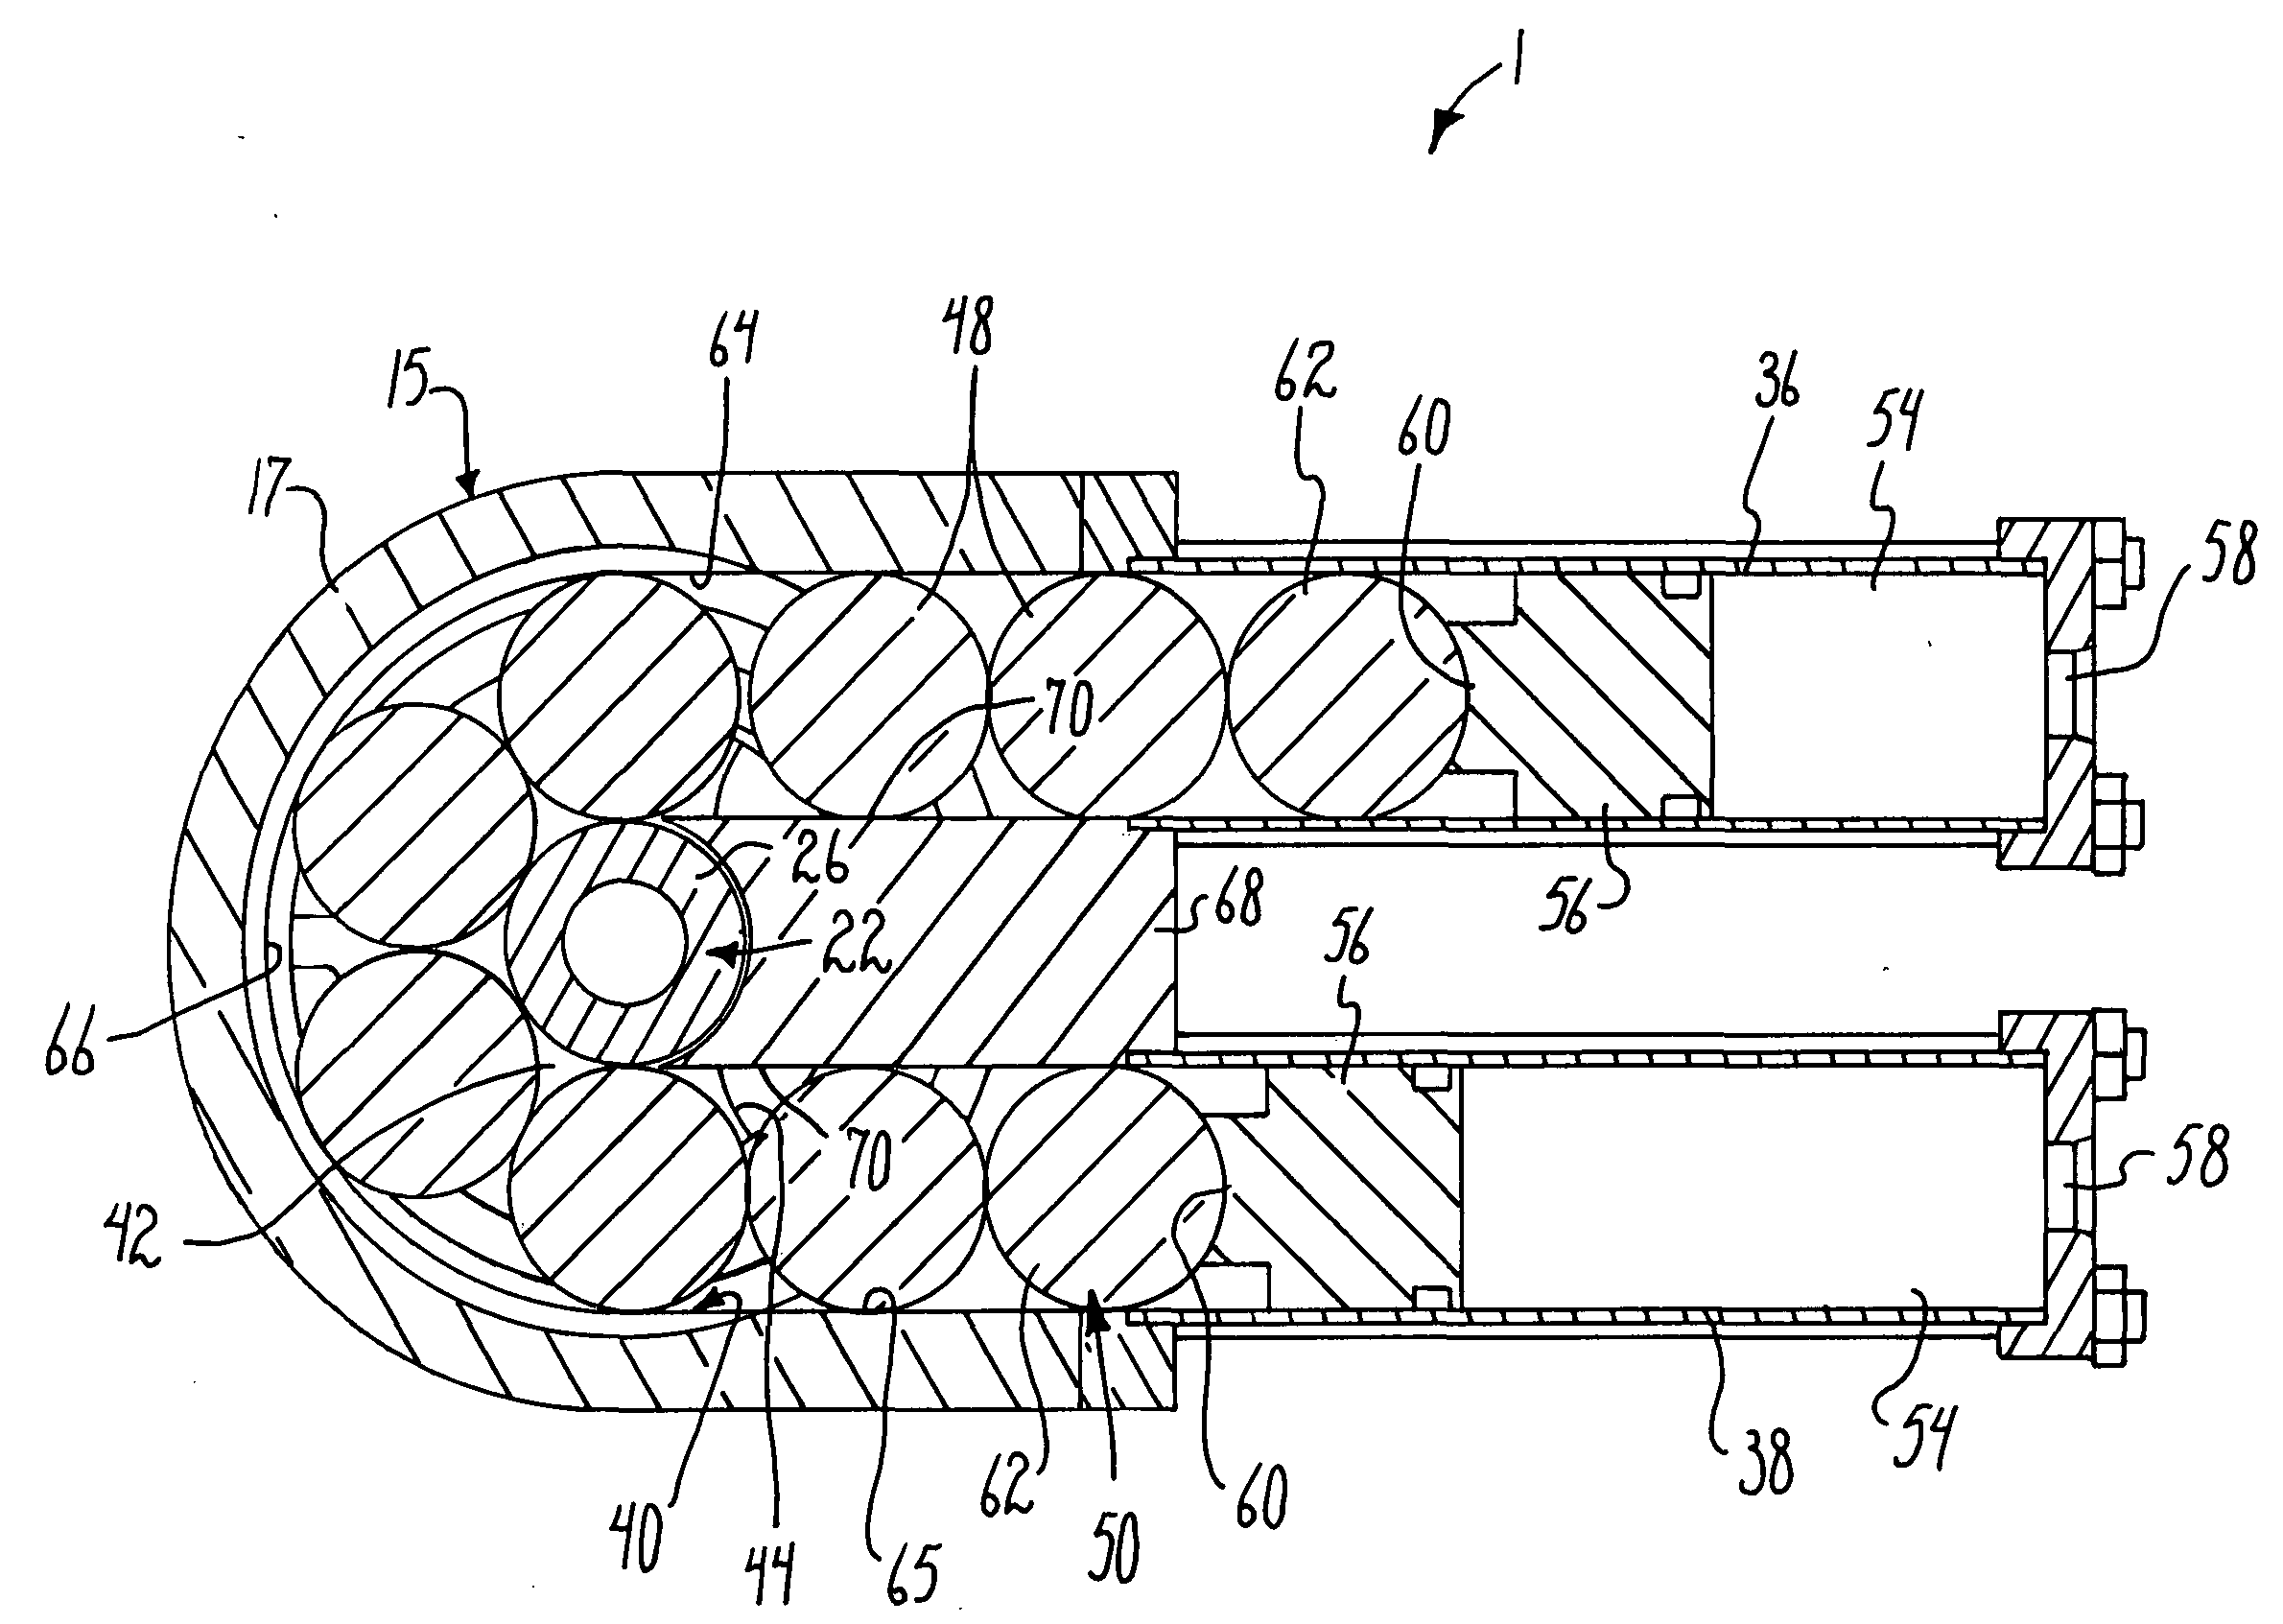 Ball and piston rotary actuator mechanism